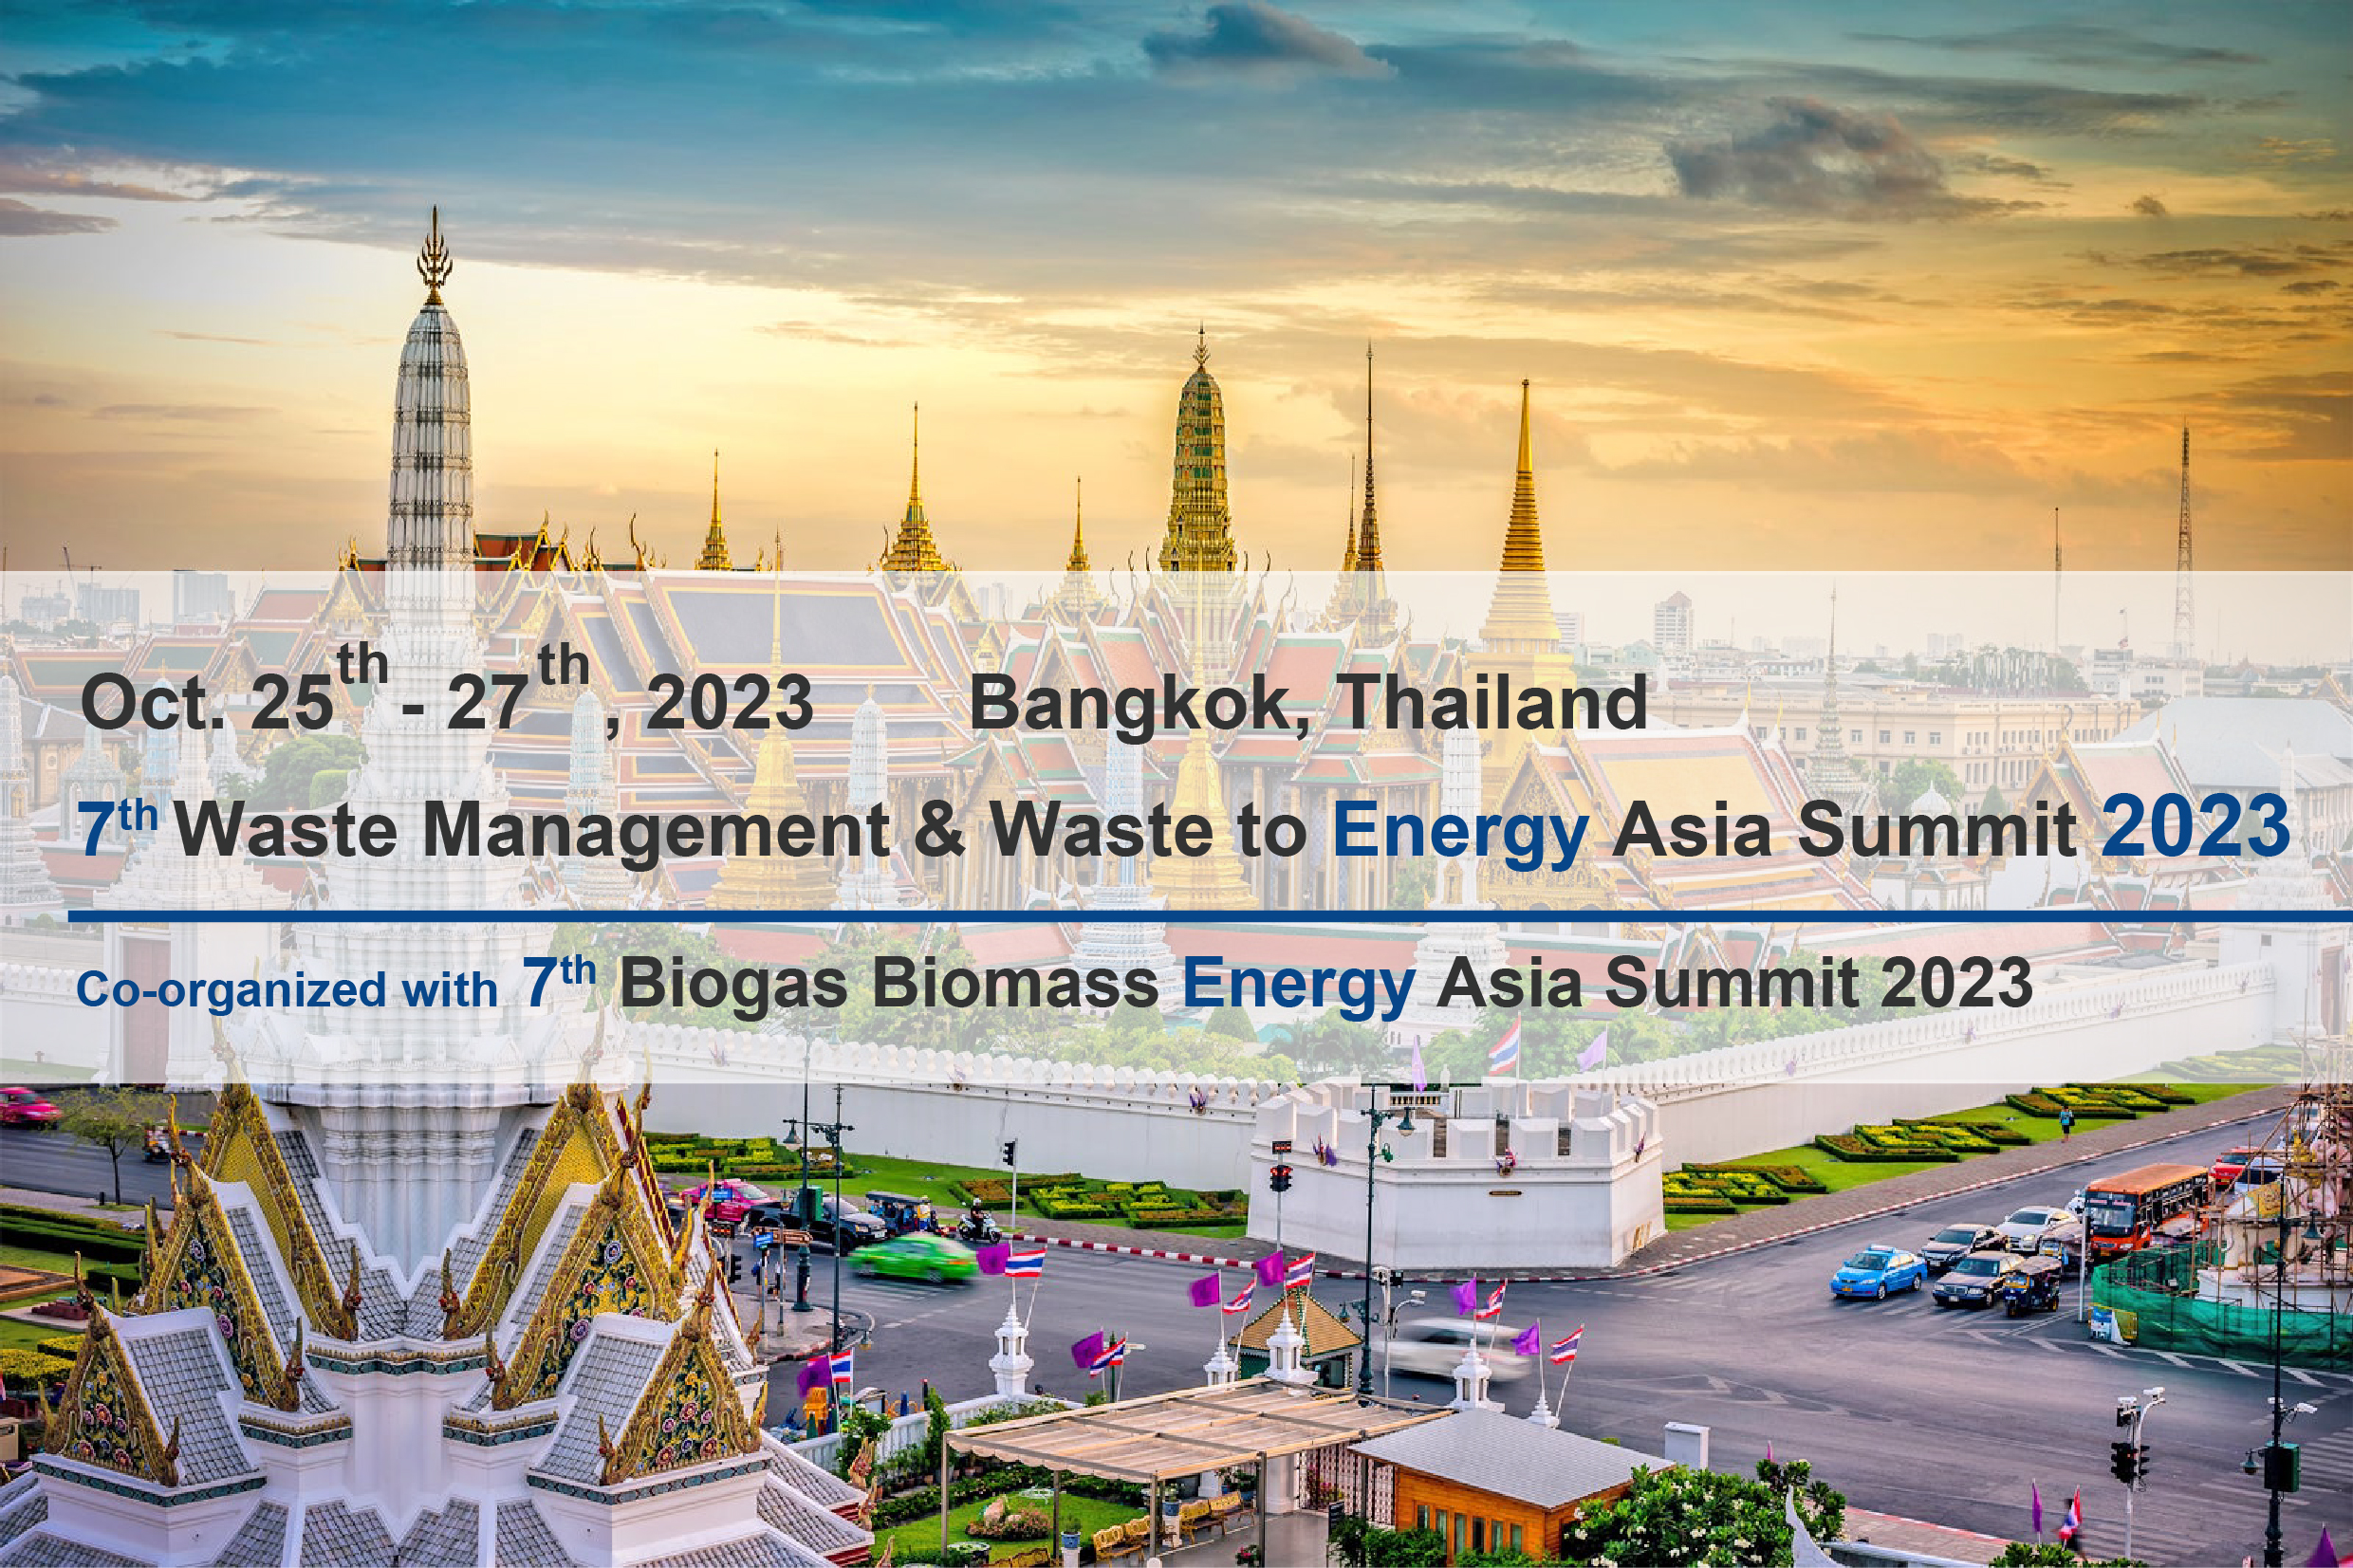 Waste to Energy Asia Summit 2023 Thailand Focus